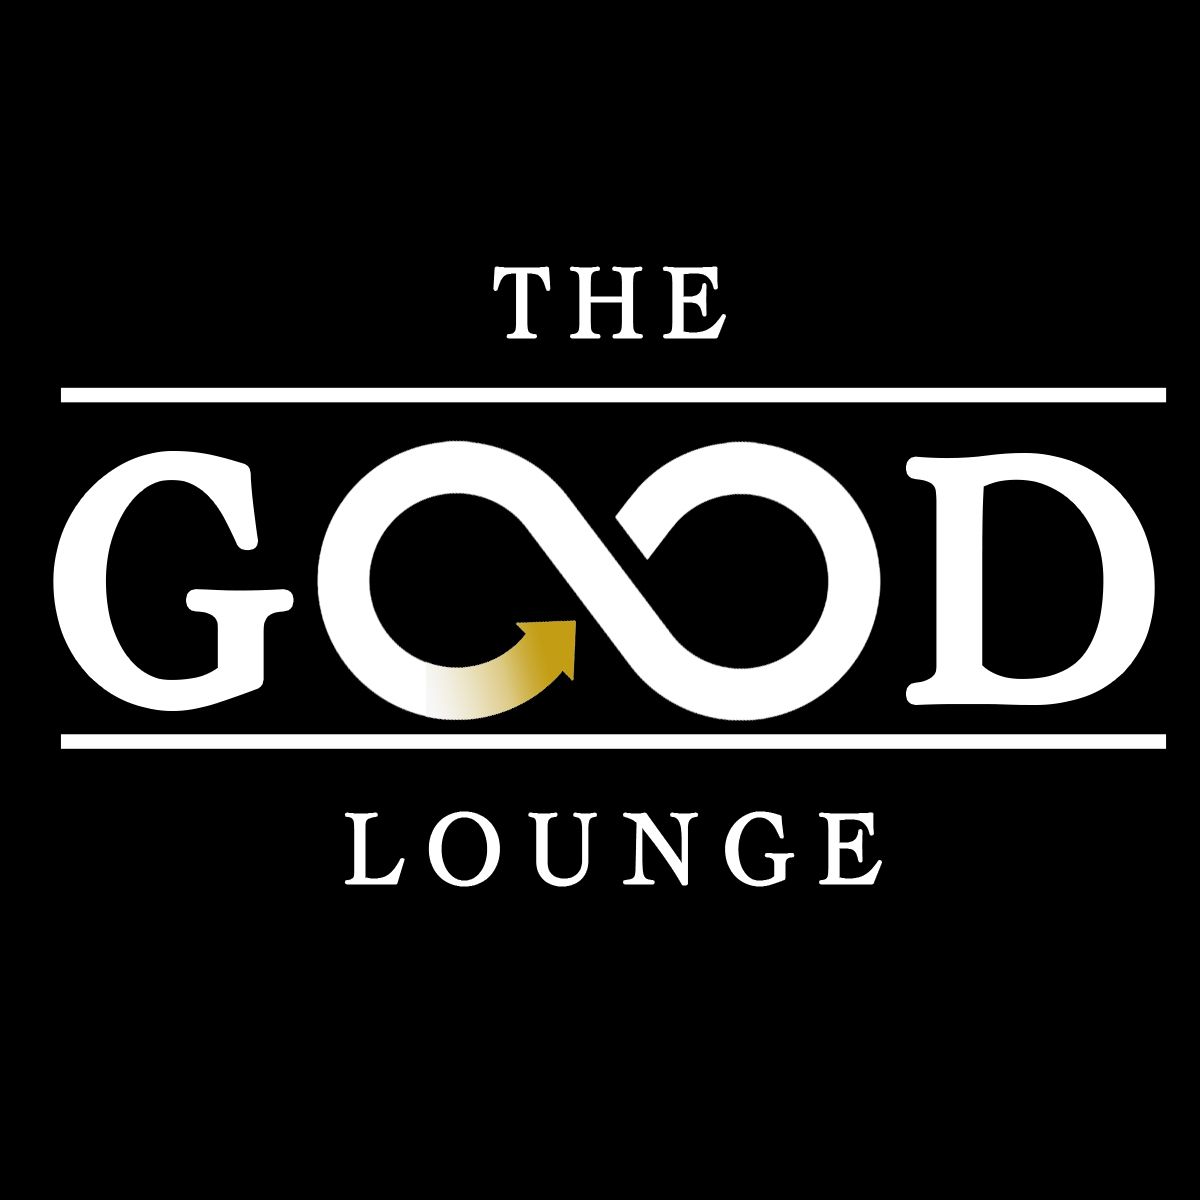 The GOOD Lounge logo